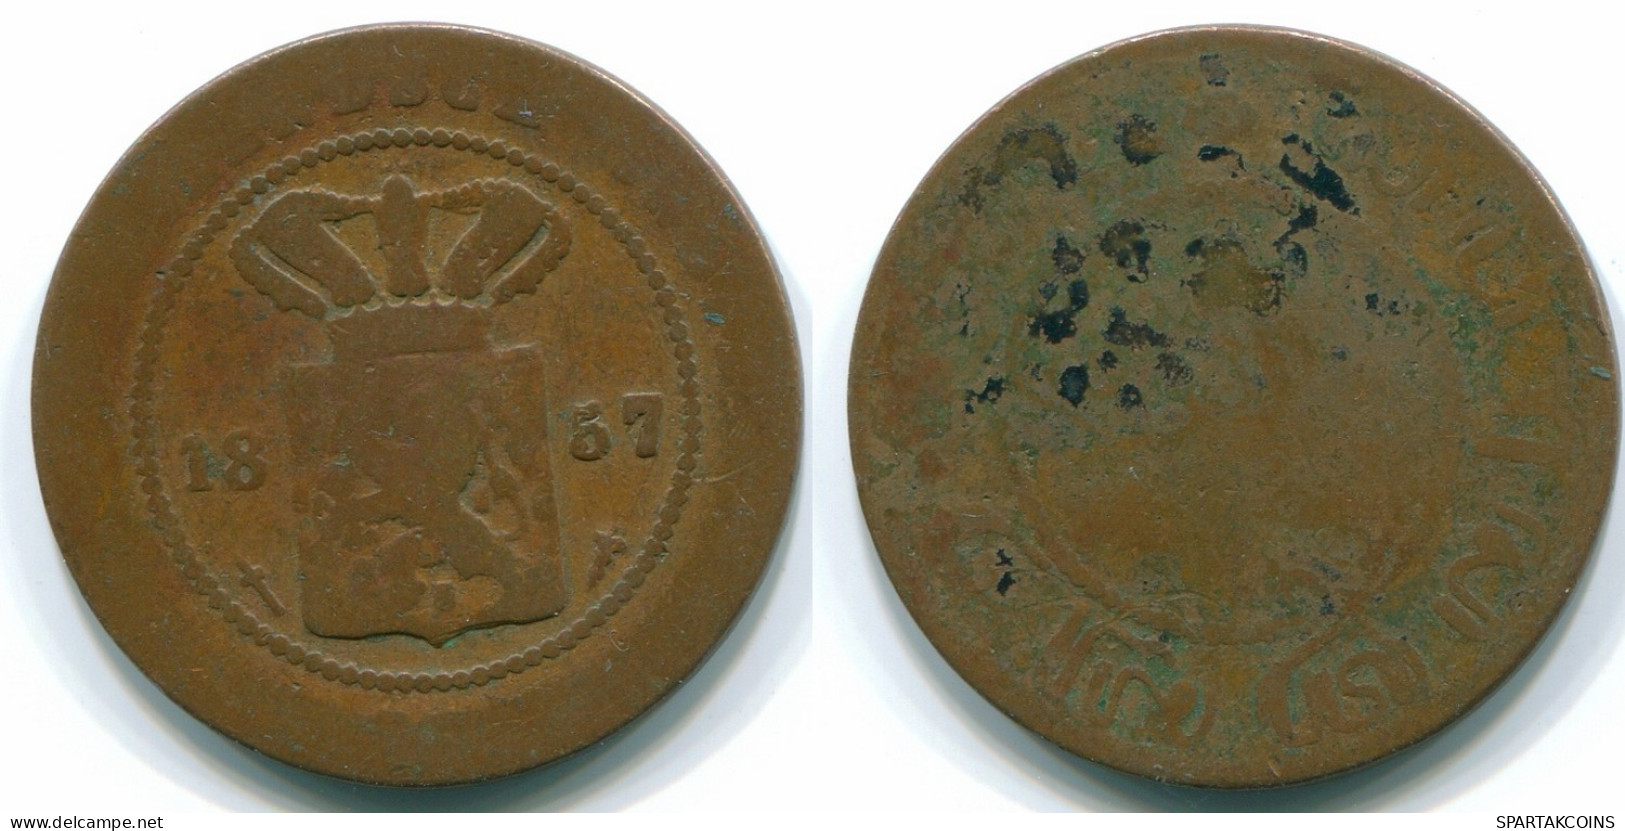 1 CENT 1857 INDES ORIENTALES NÉERLANDAISES INDONÉSIE INDONESIA Copper Colonial Pièce #S10023.F.A - Nederlands-Indië